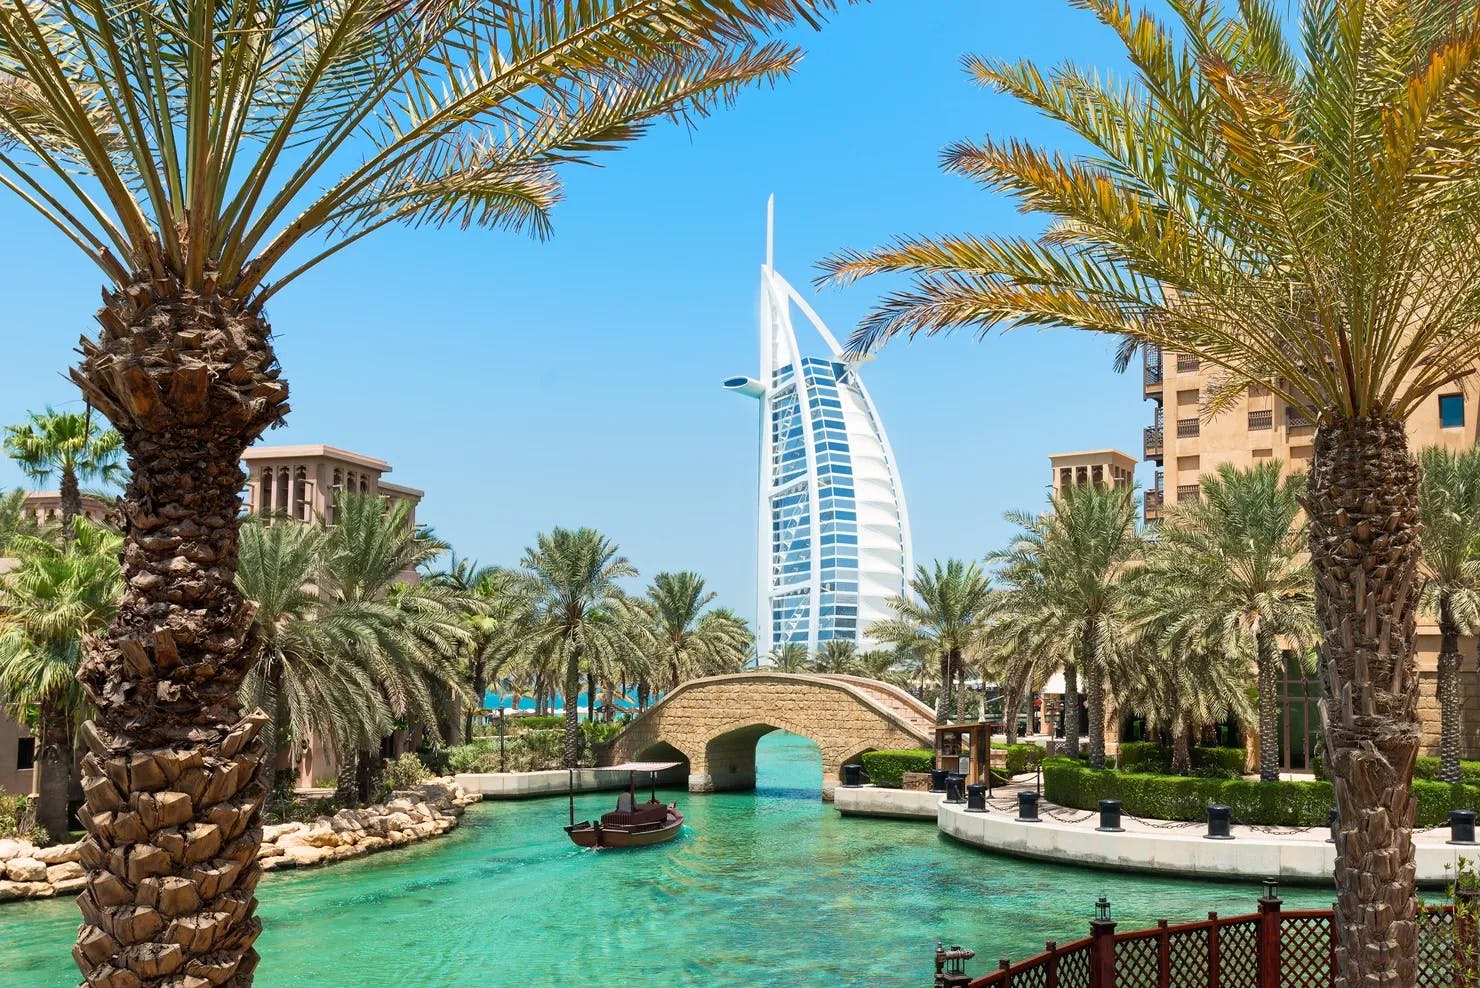 The world's first 7-star luxury hotel Burj Al Arab "Tower of the Arabs" in Madinat Jumeirah, Dubai, UAE